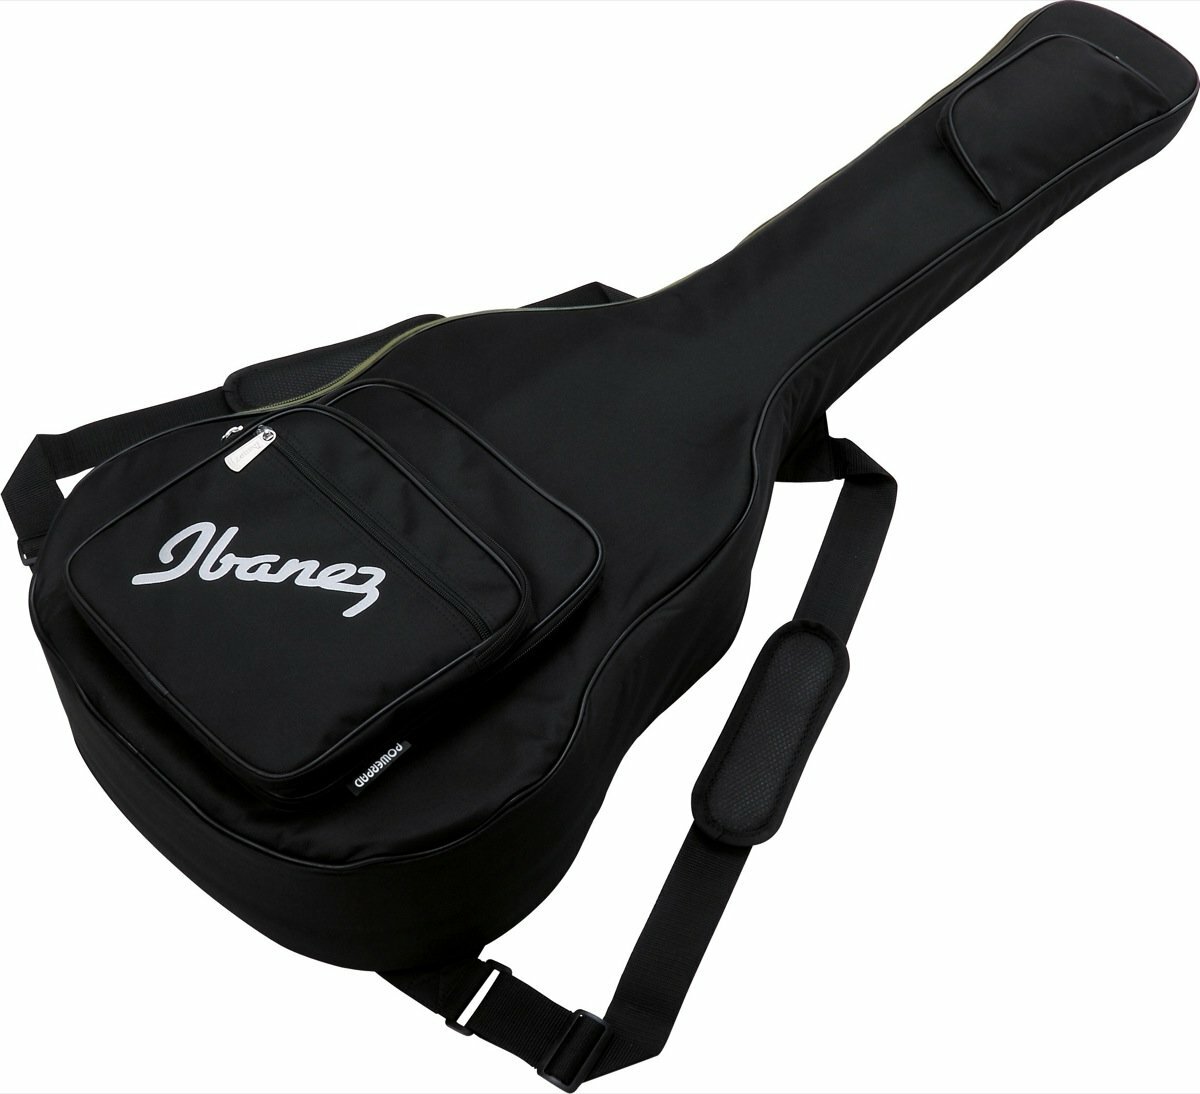 Ibanez Iabb510 Bk Powerpad Acoustic Bass Gig Bag - Funda para bajo eléctrico - Main picture